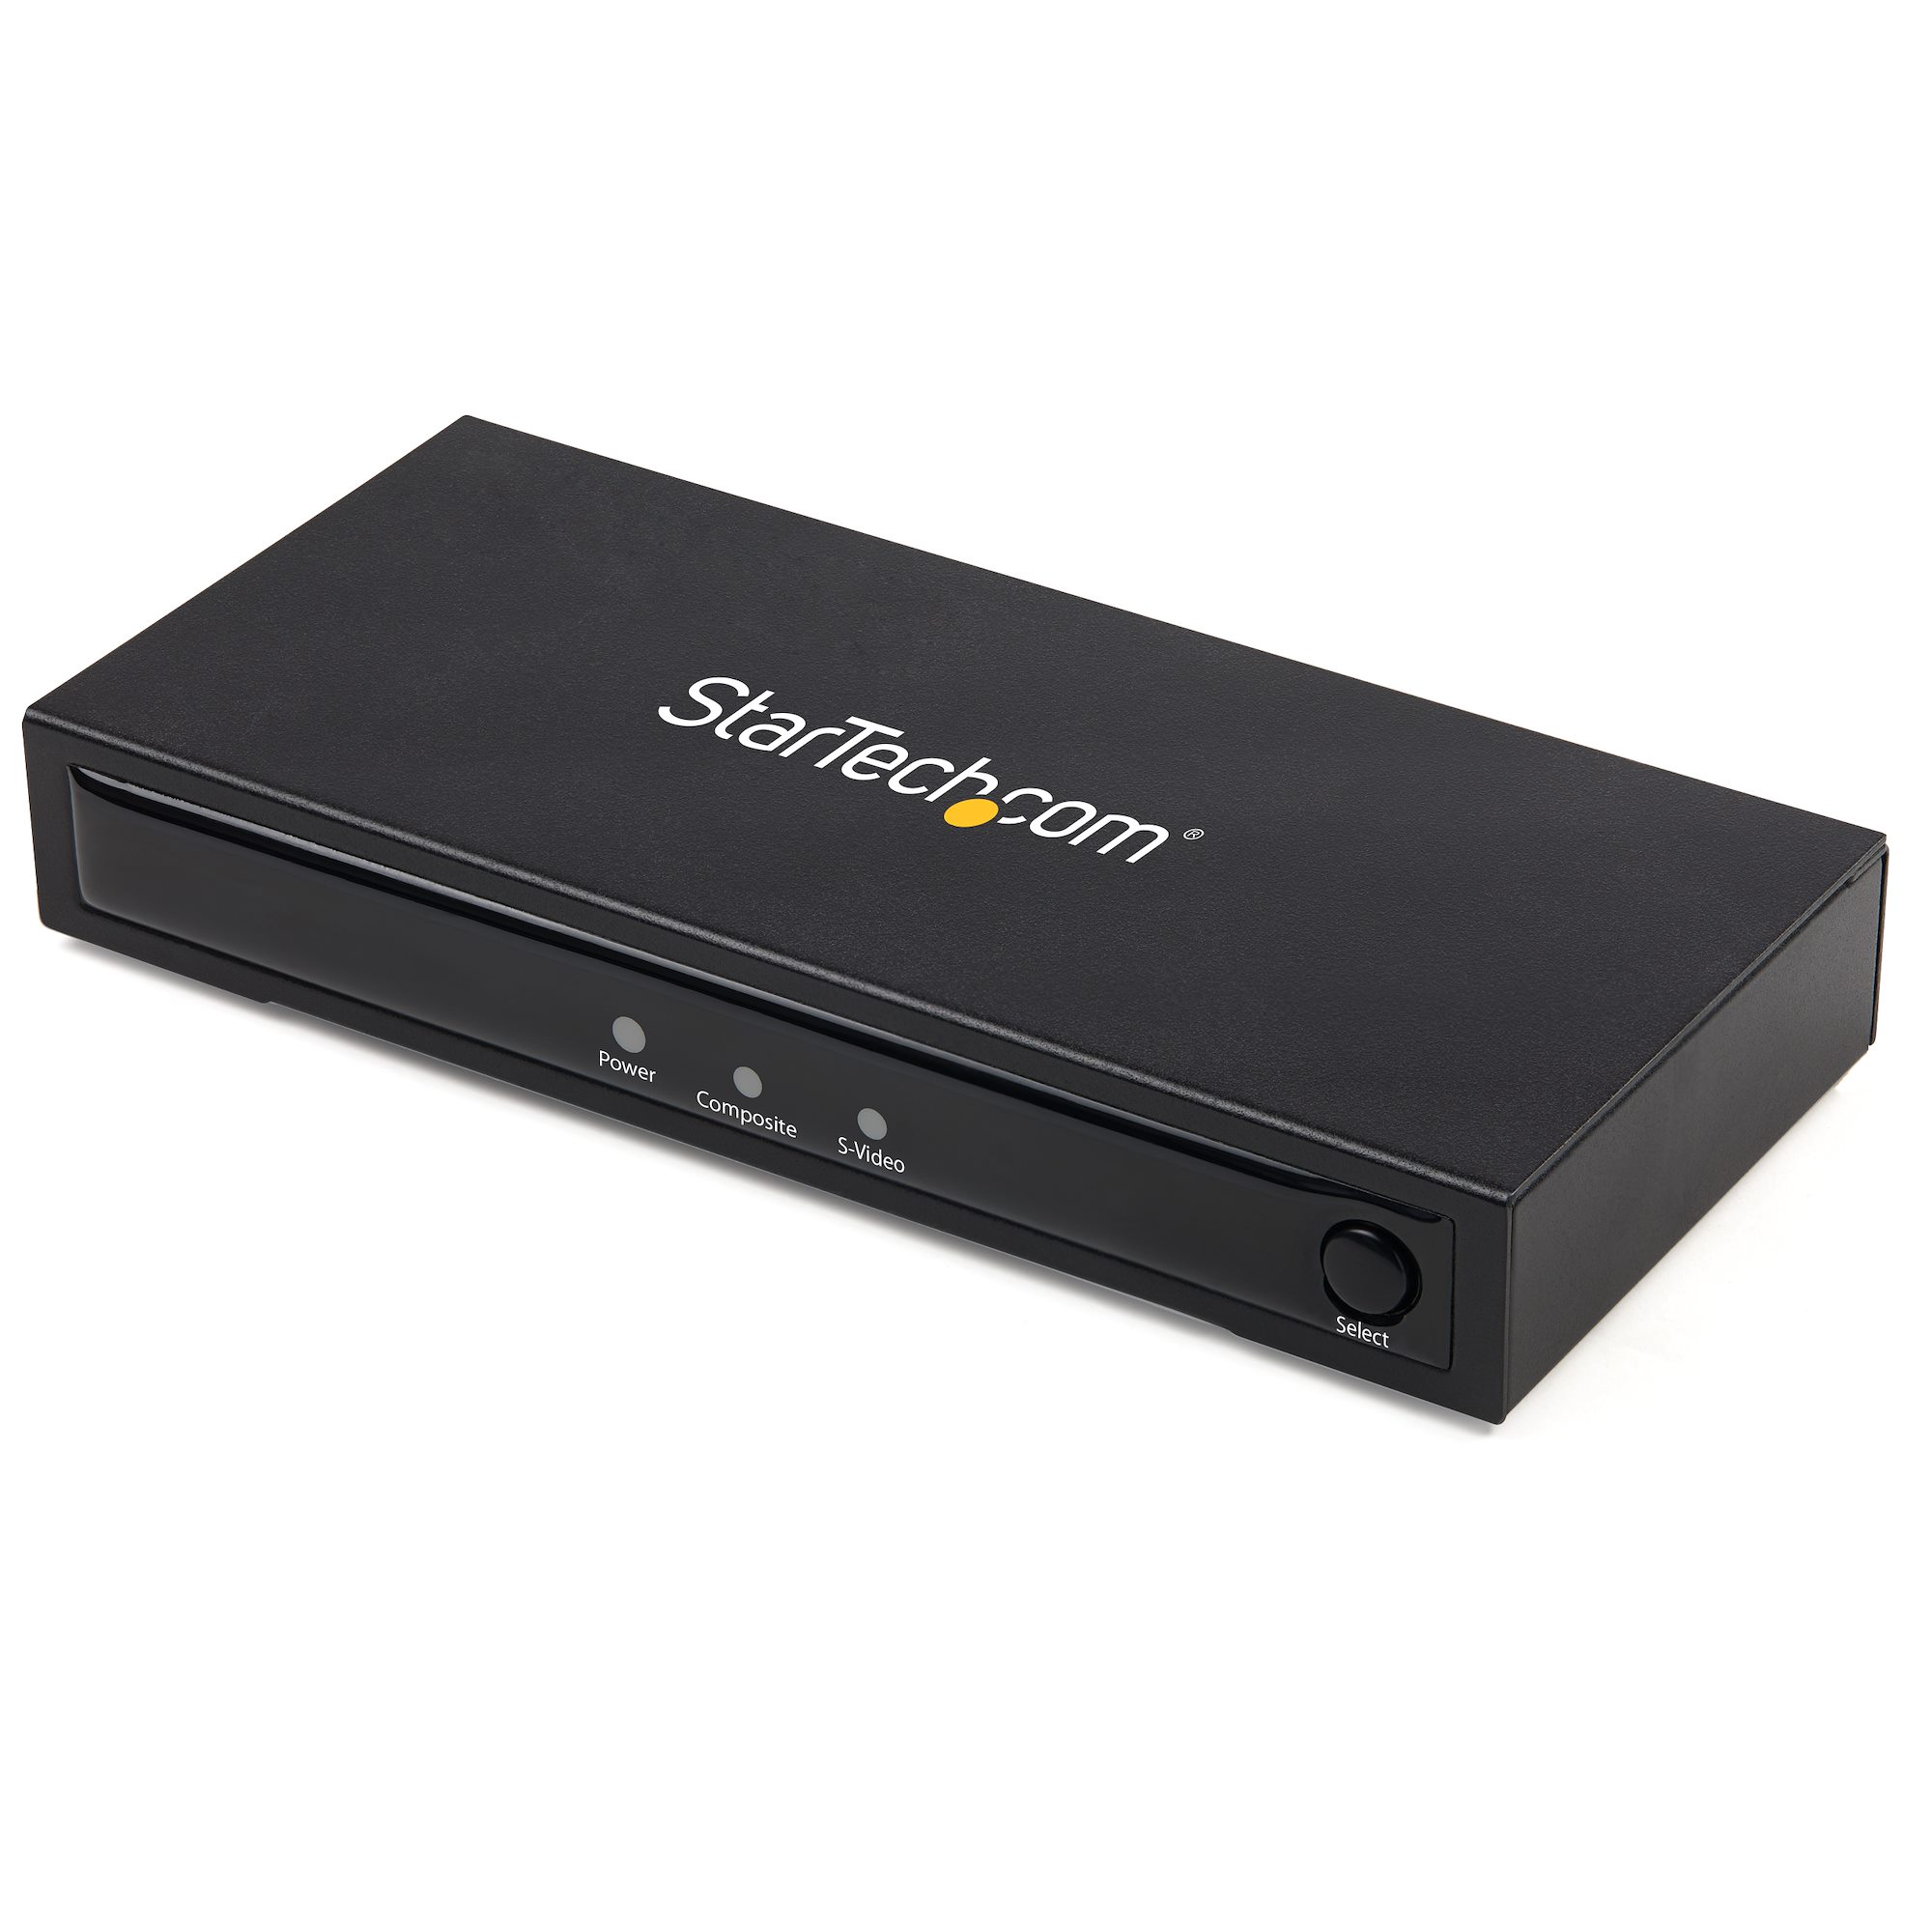 Æble Harmoni tackle Converter - Composite to HDMI - 720p - Video Converters | StarTech.com